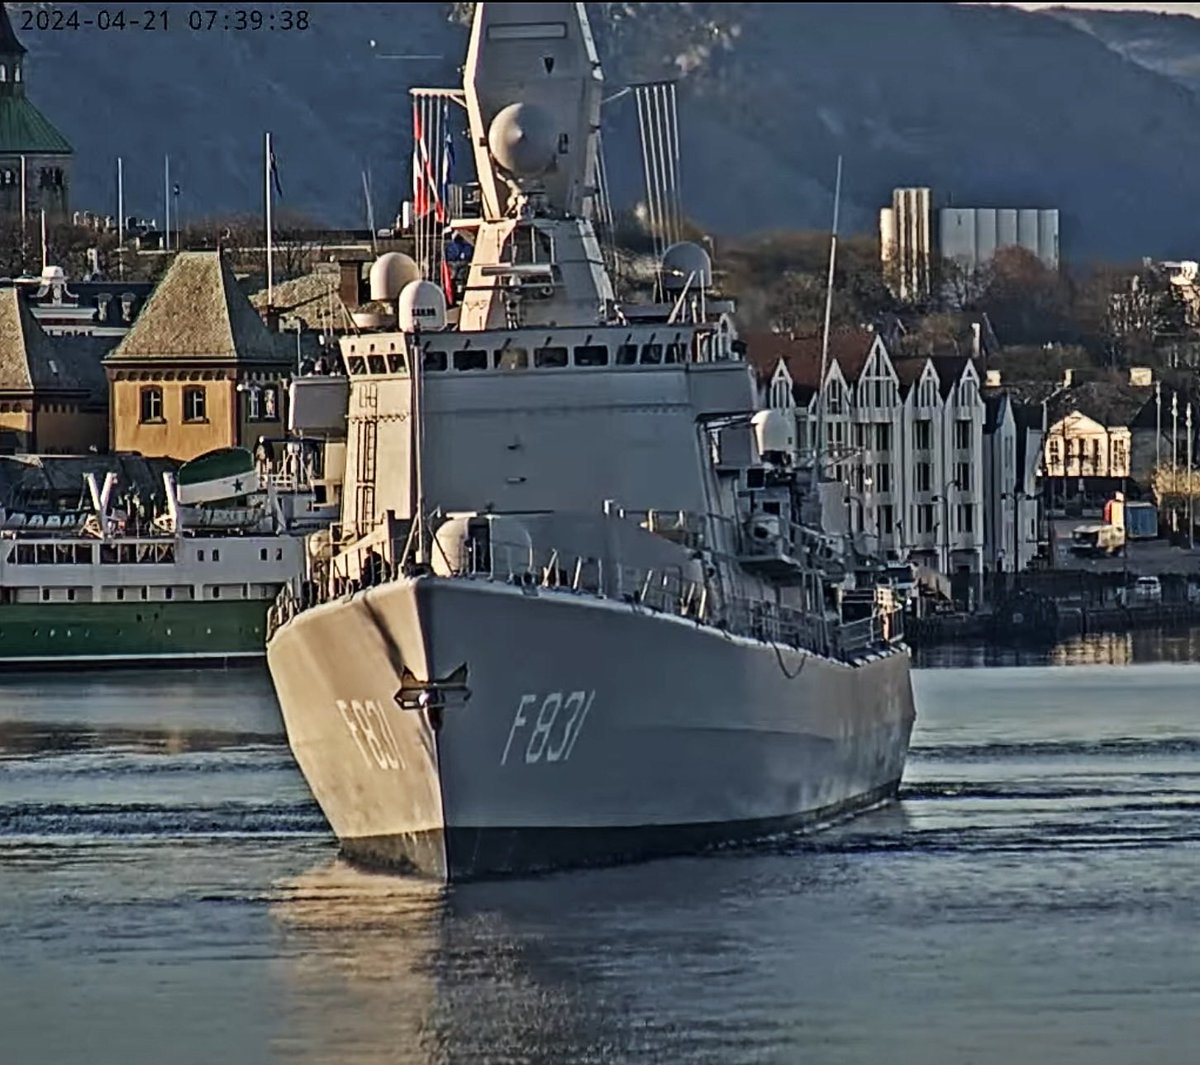 Royal Netherlands Navy Karel Doorman-class frigate HNLMS Van Amstel (F831) coming into Stavanger, Norway - April 21, 2024 #hnlmsvanamstel #f831

SRC: webcam